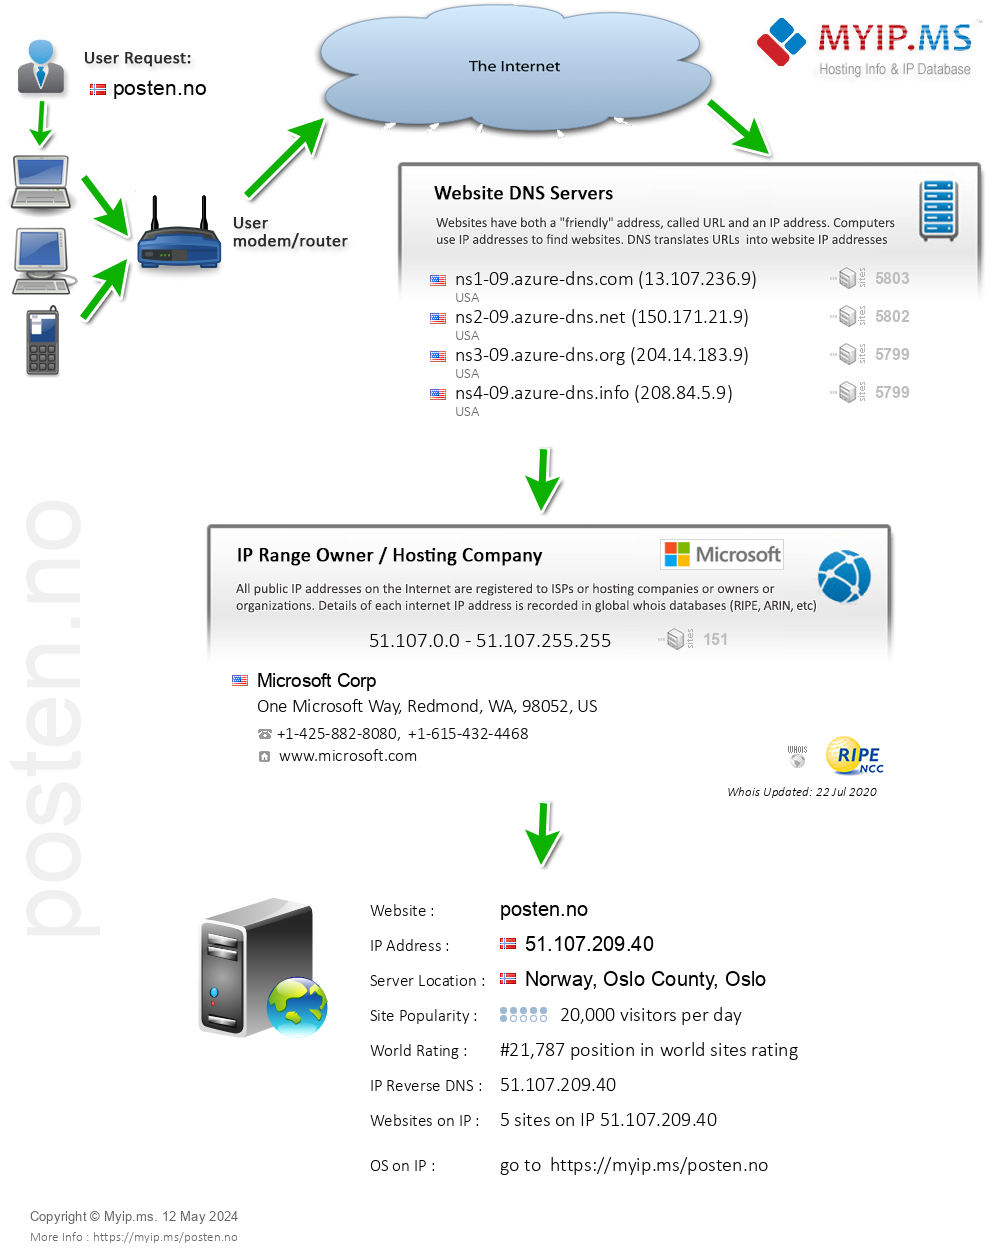 Posten.no - Website Hosting Visual IP Diagram